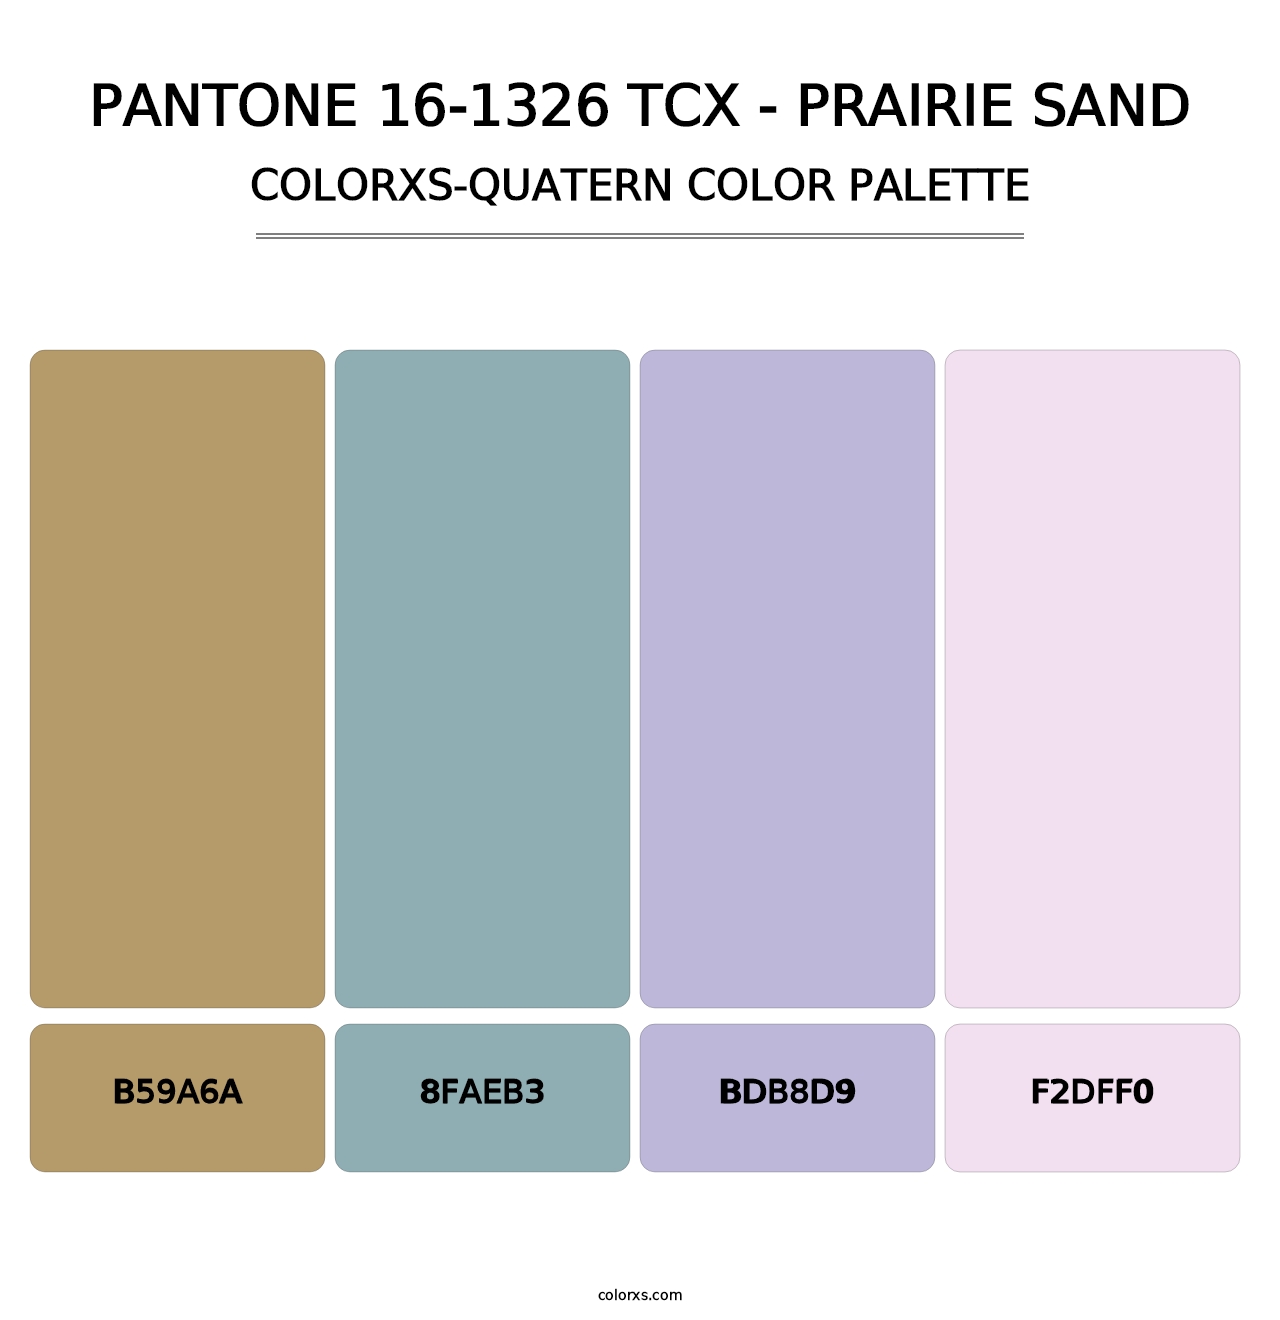 PANTONE 16-1326 TCX - Prairie Sand - Colorxs Quatern Palette